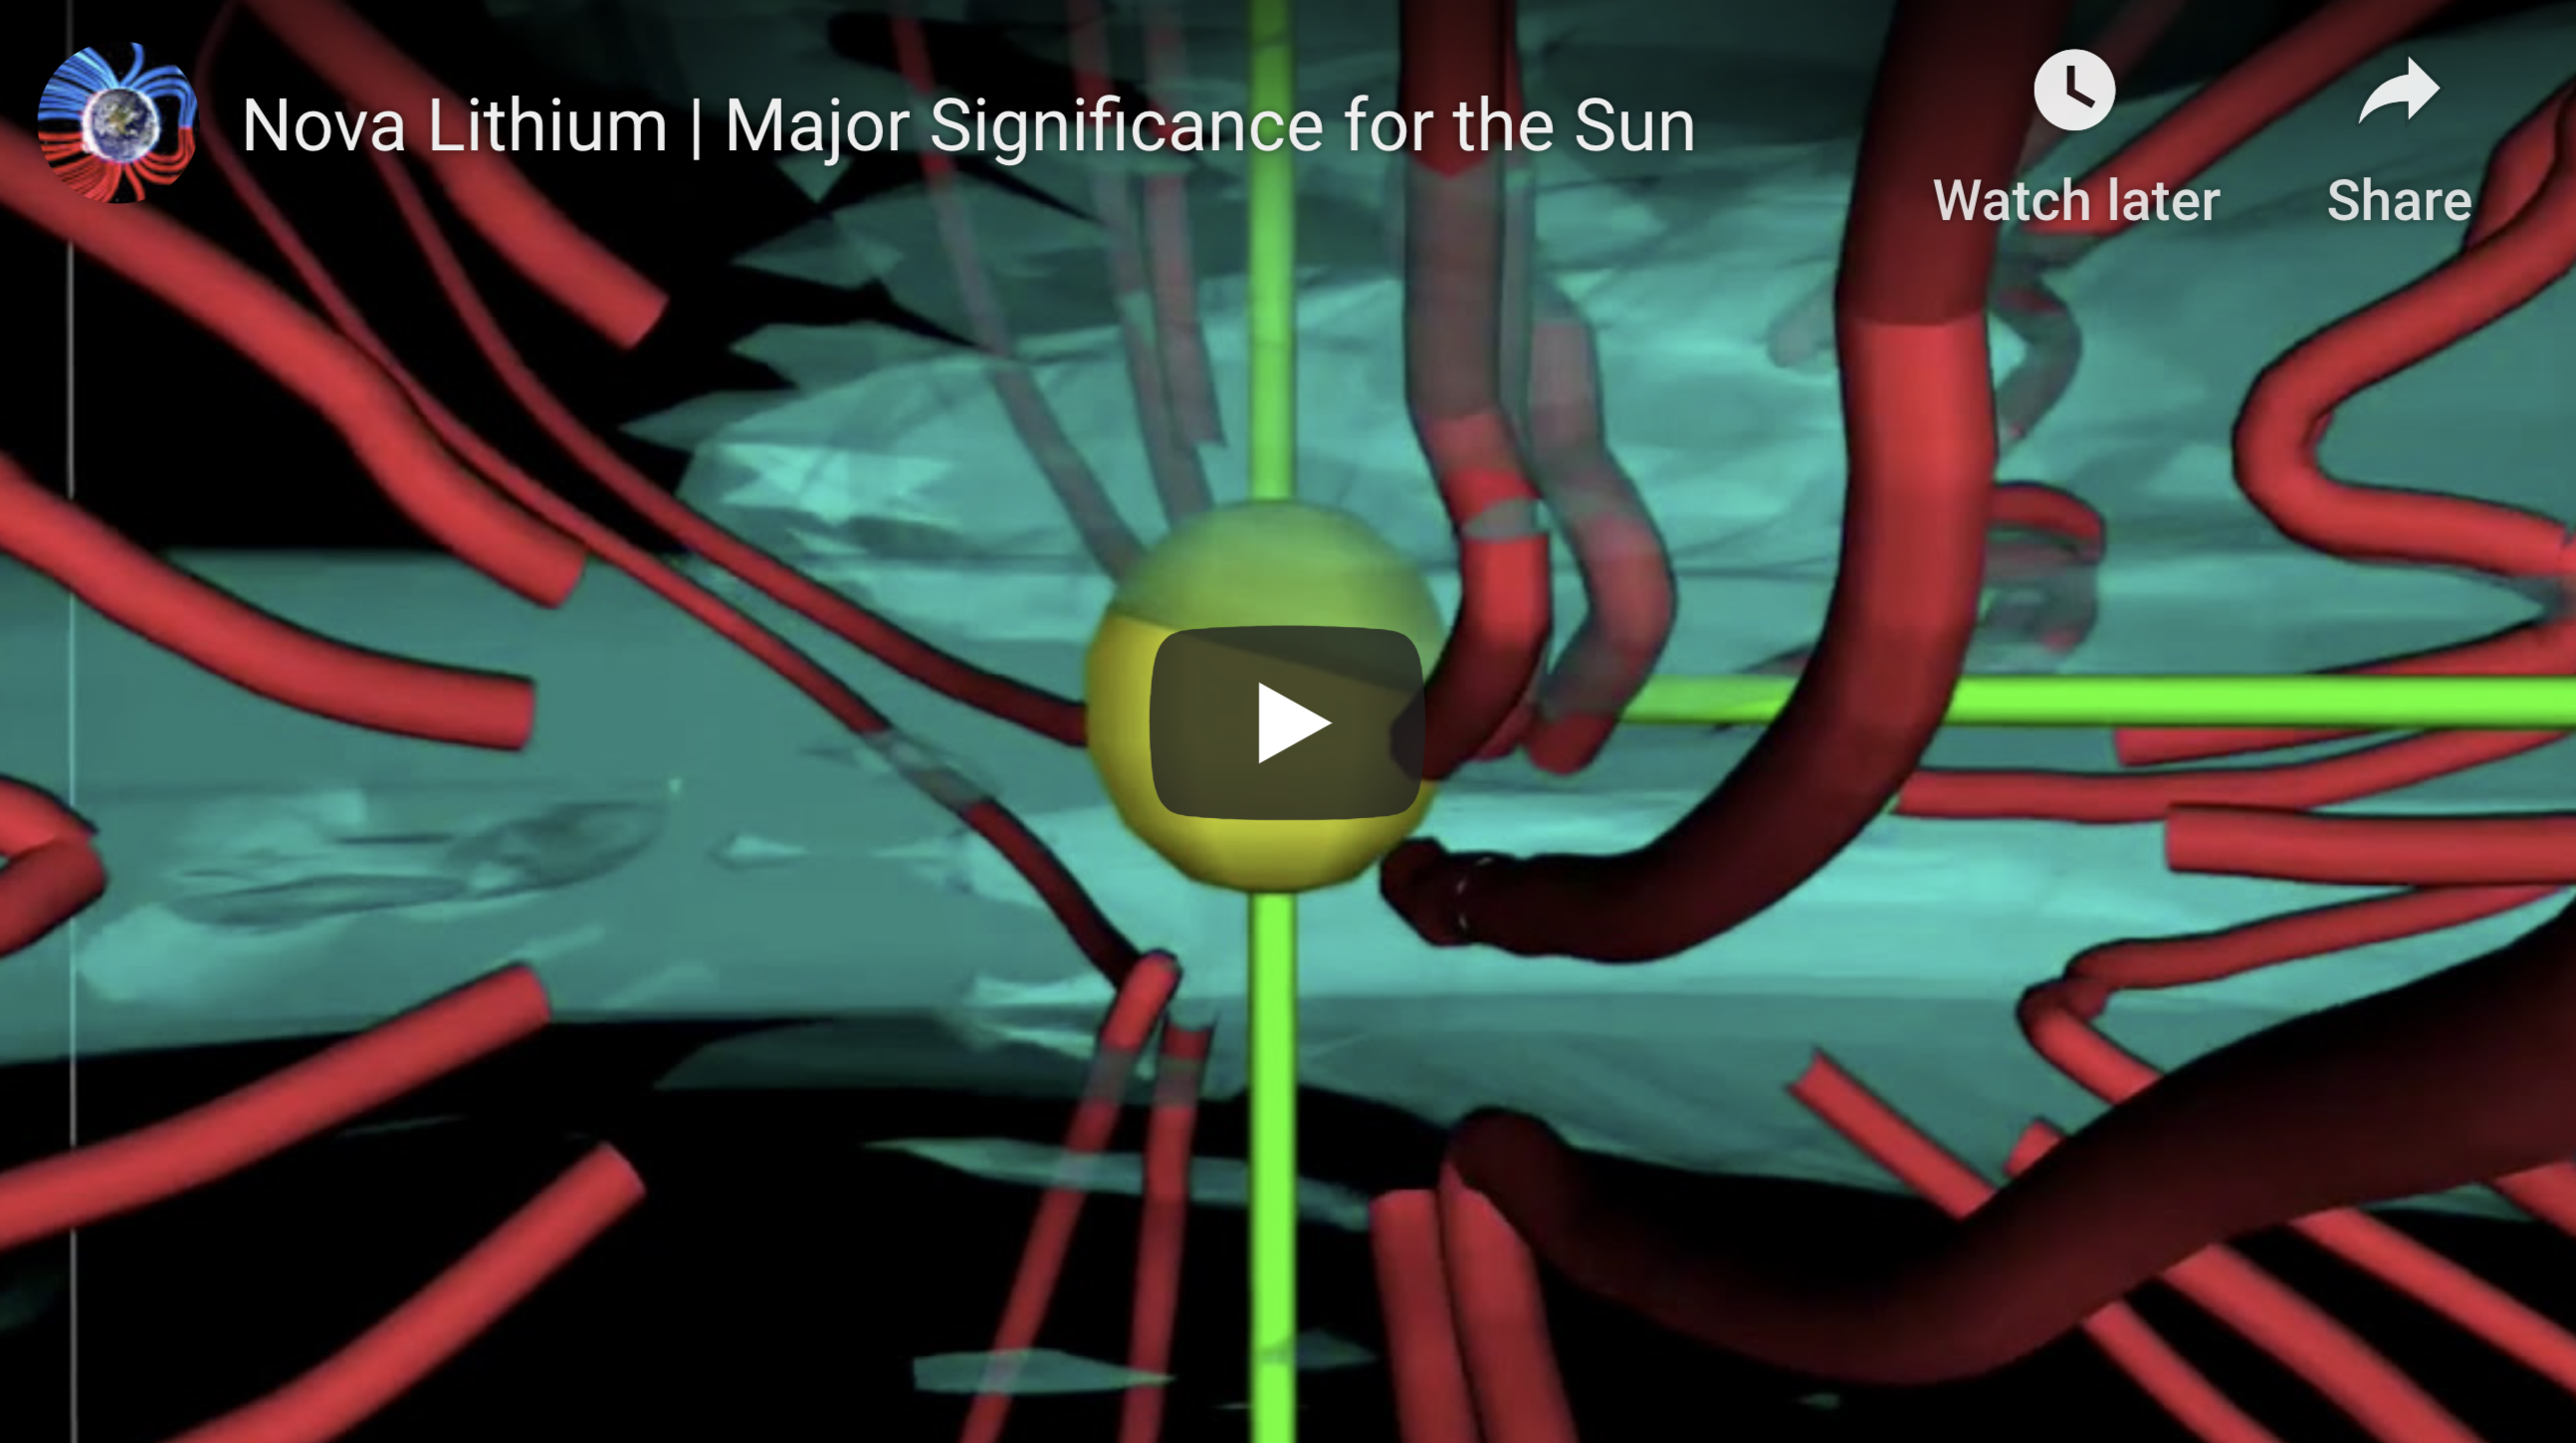 Nova Lithium Major Significance for the Sun 6 5 2020